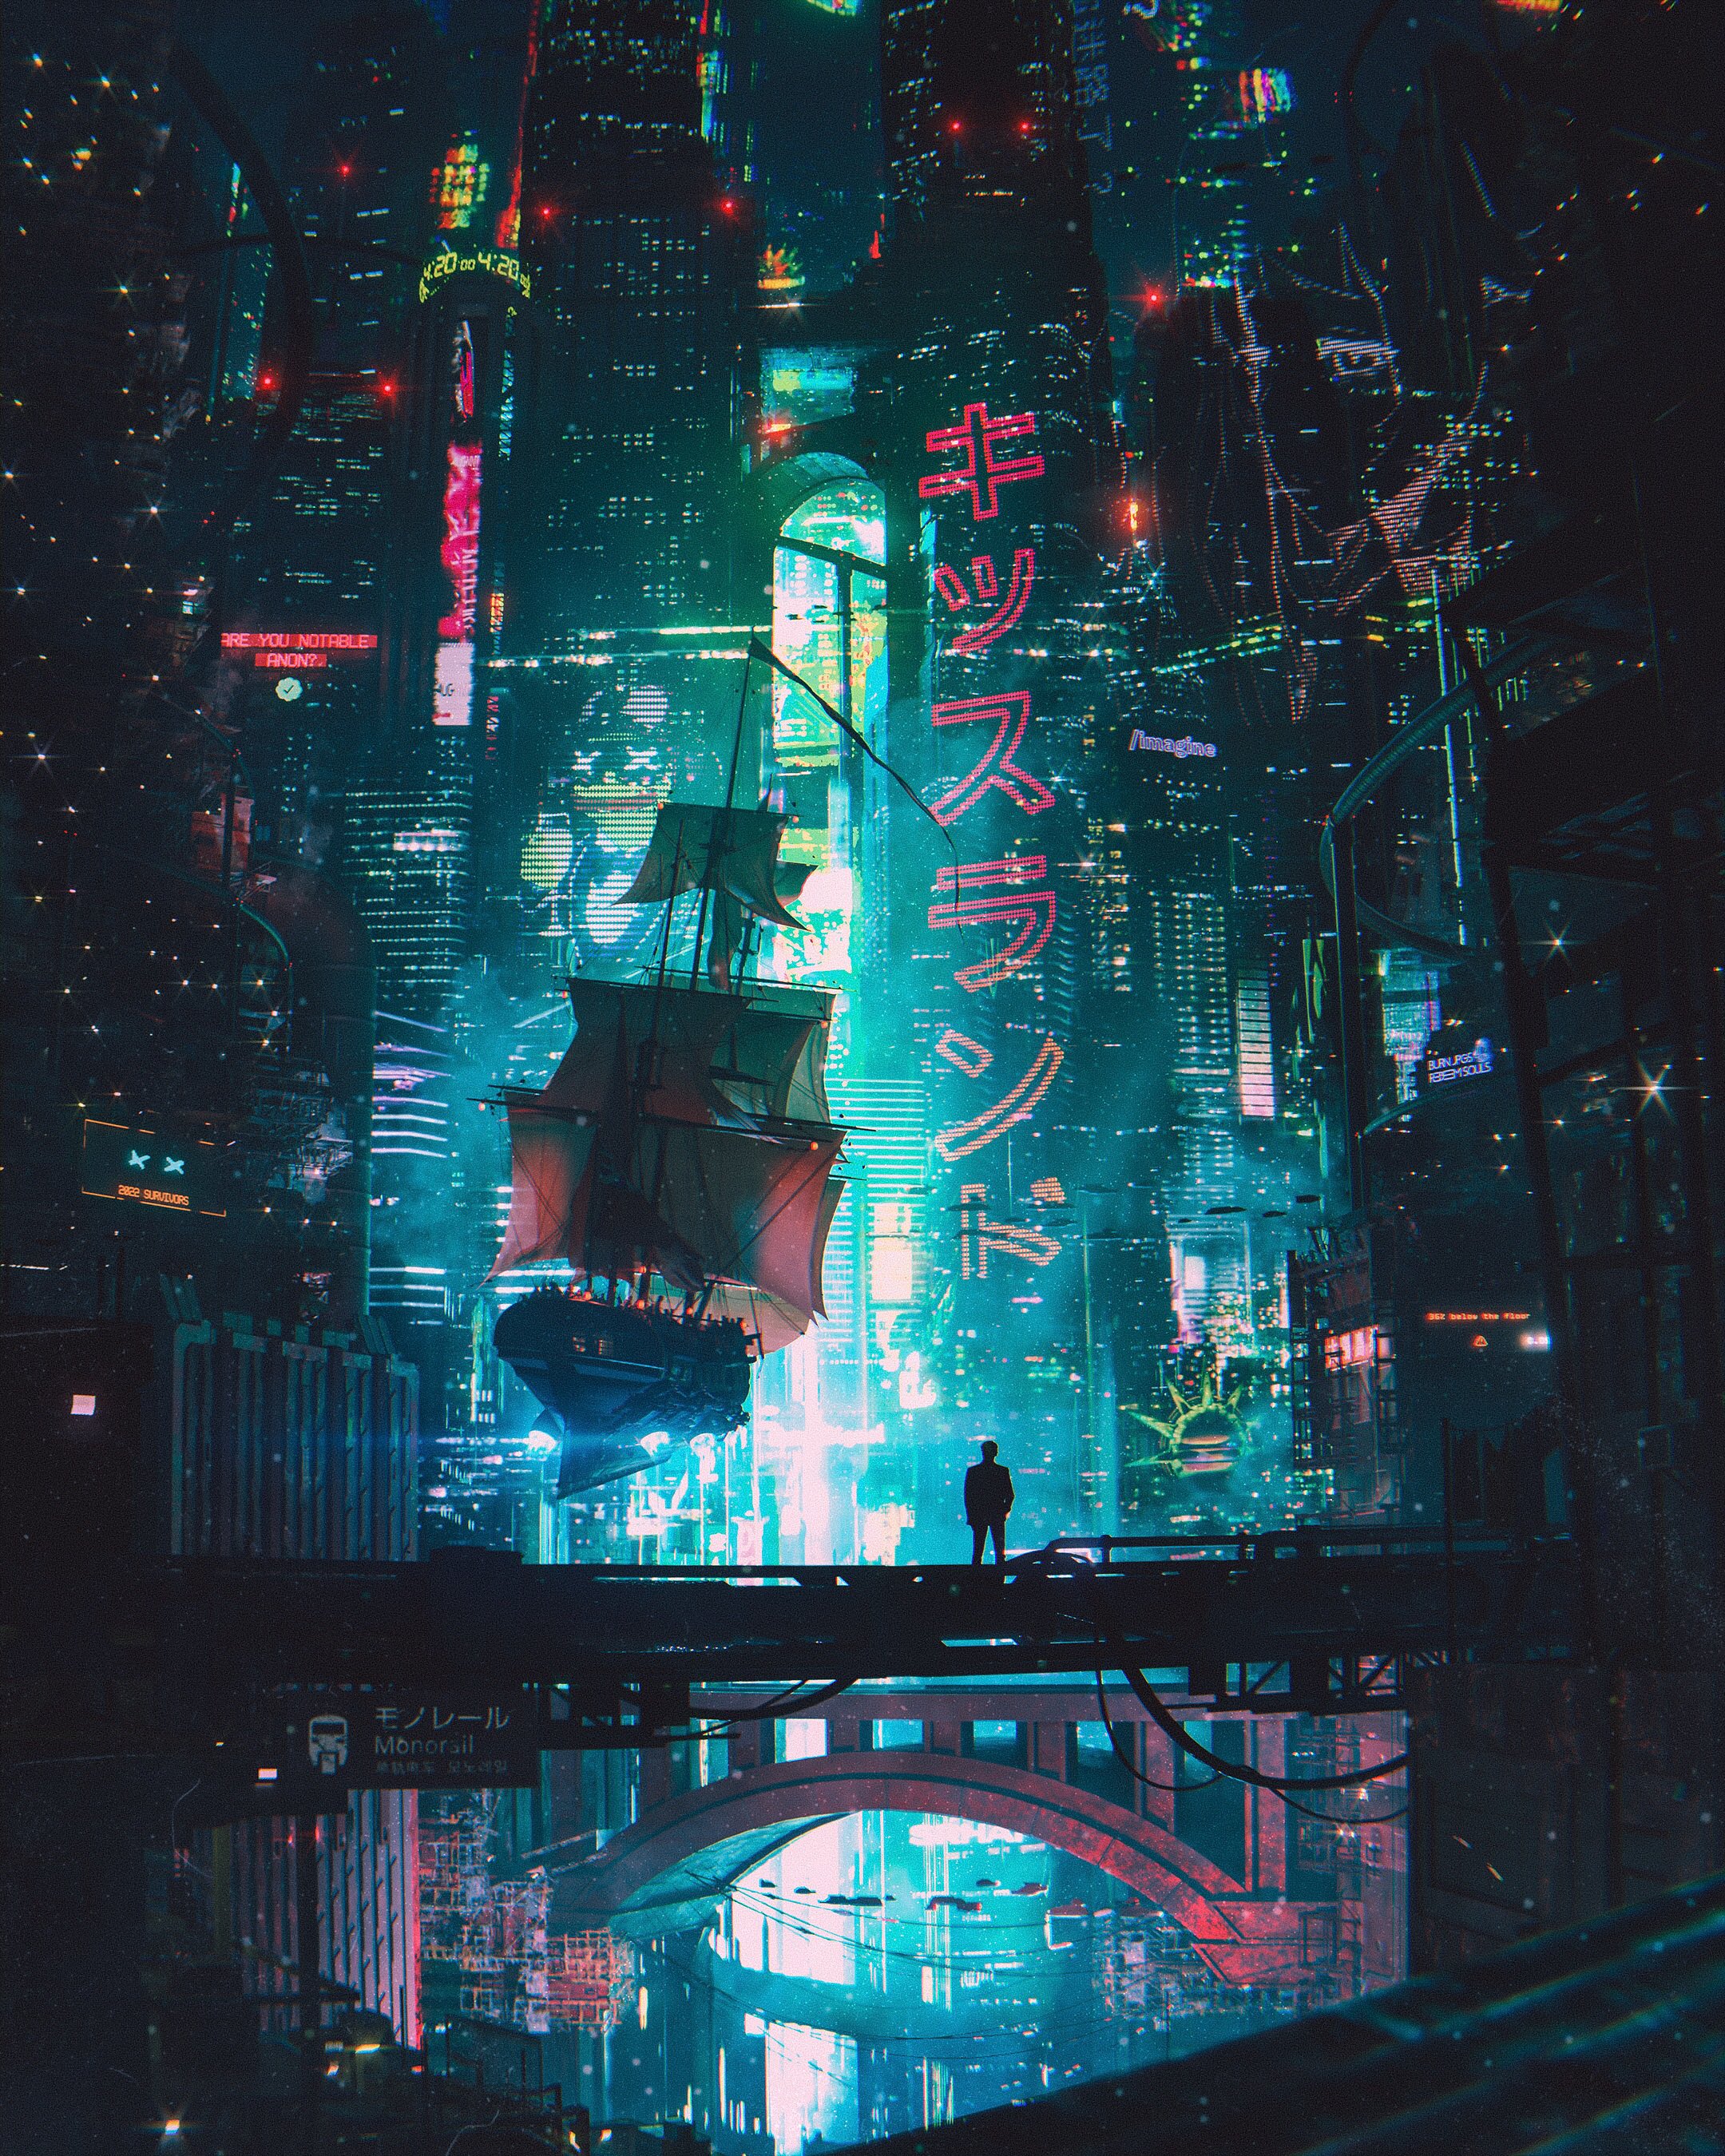 City Cyberpunk Science Fiction Neon Artwork Night City Lights Digital Art Building Japanese Ship Bri 2160x2700